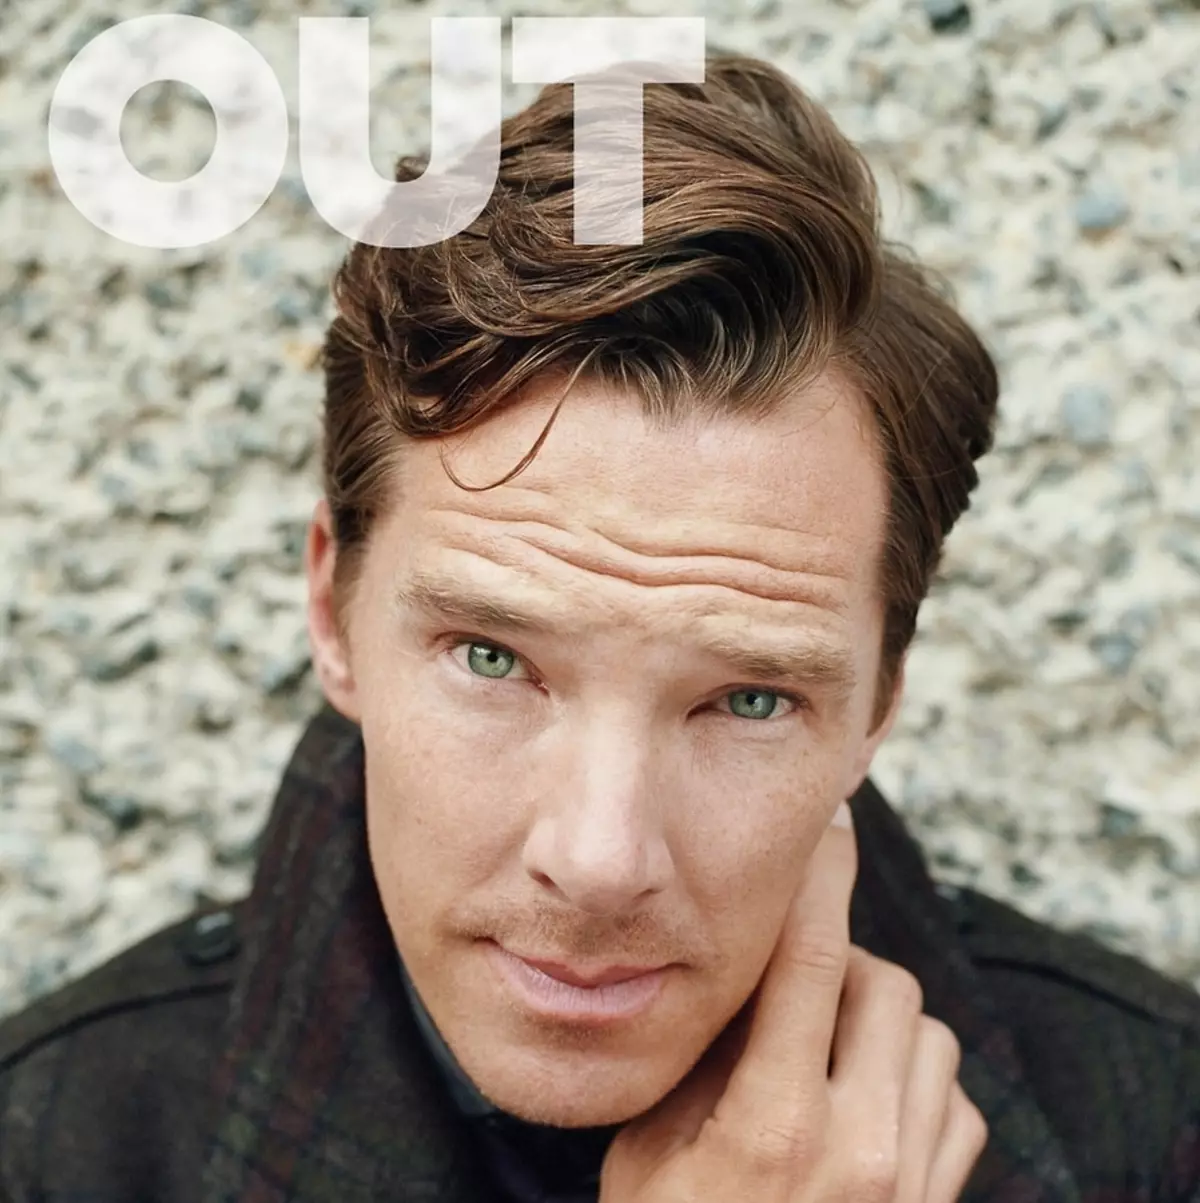 Benedict Cumberbatch in Out Magazine. November 2014.